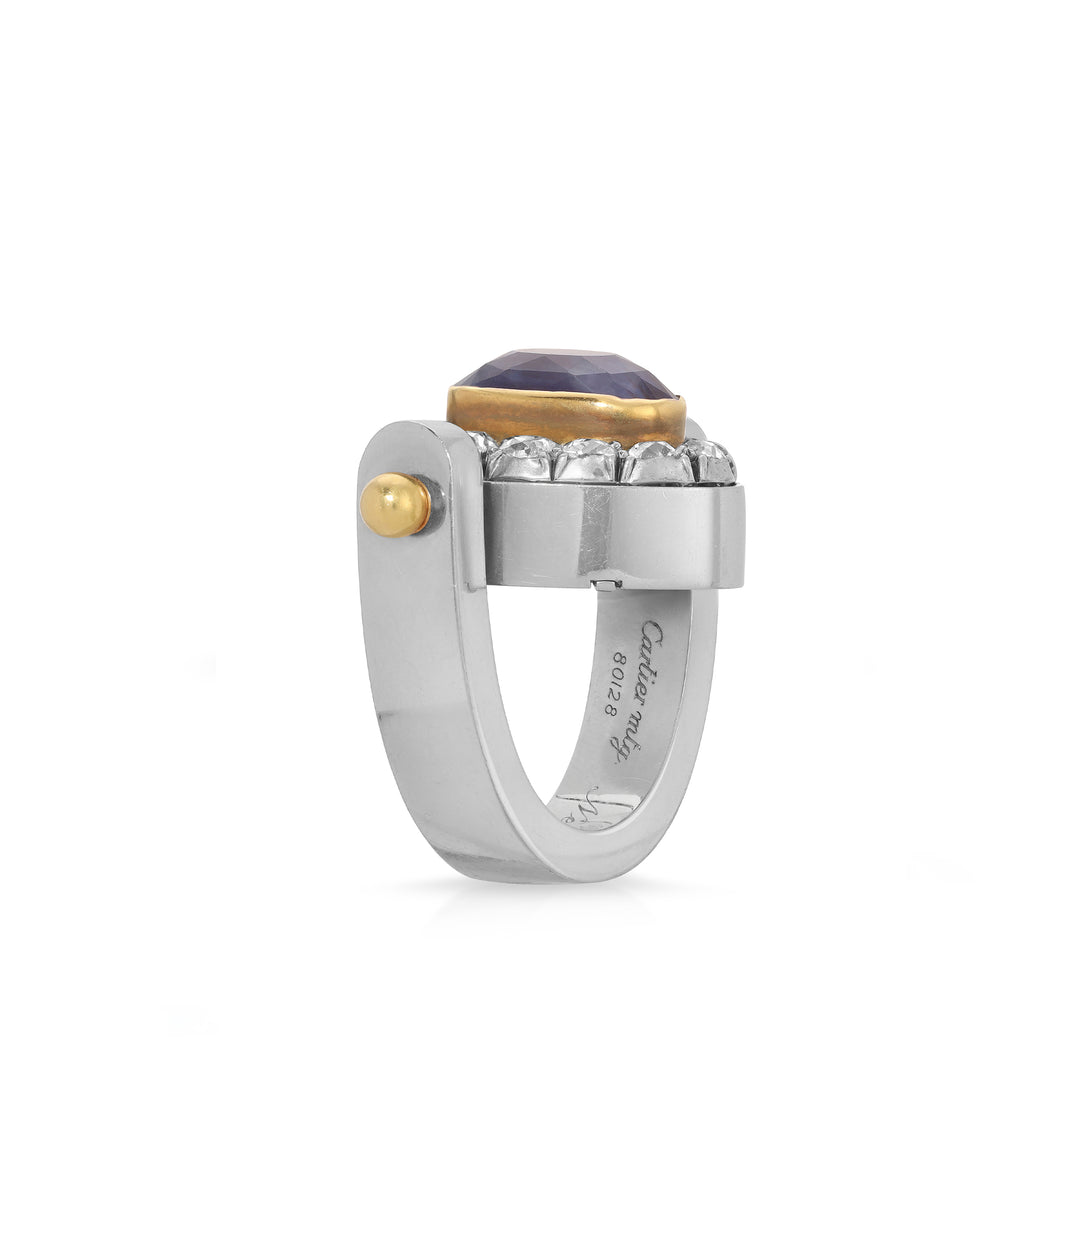 Cartier Modernist Sapphire Ring by Mitzi Cufflinks in Platinum & 18K Gold